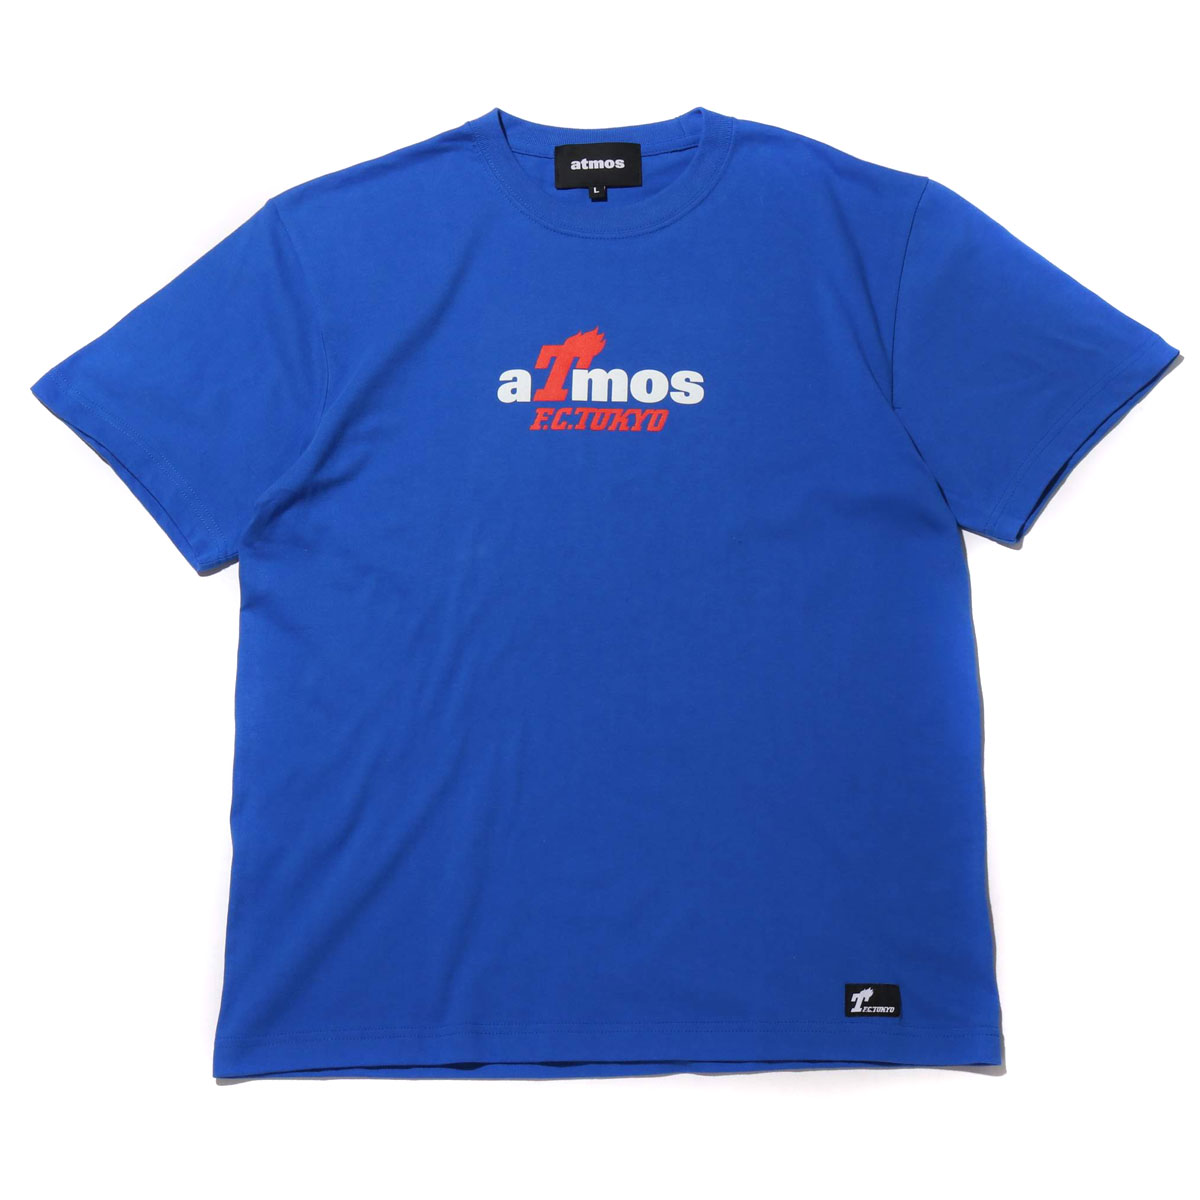 atmos x FC TOKYO T-LOGO TEE(アトモス エフシートウキョウ ティーロゴ ティー)BLUE【メンズ レディース 半袖Tシャツ】20SP-S